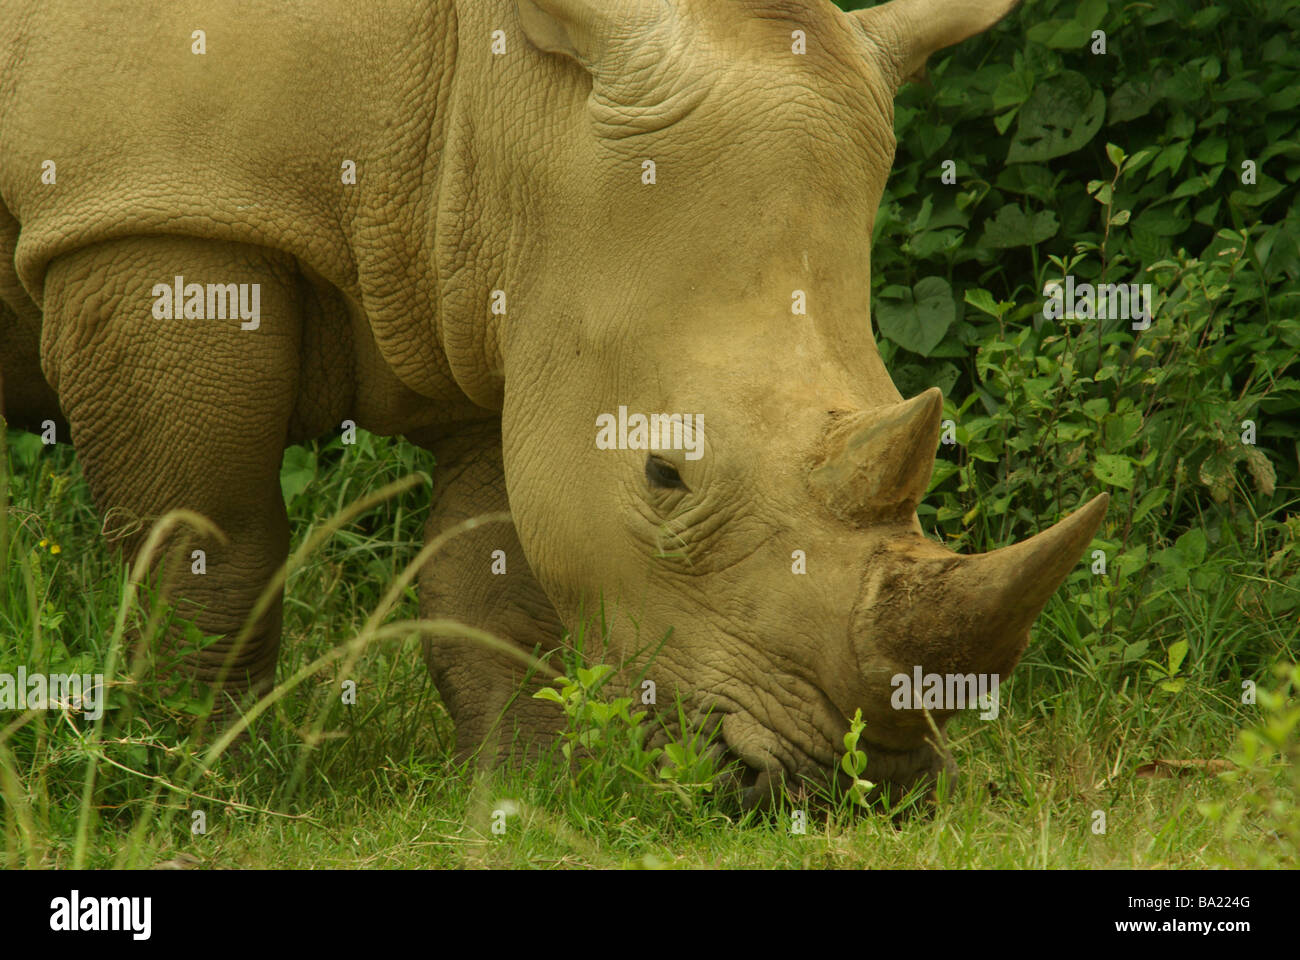 Le rhinocéros blanc - Ceratotherium simum Banque D'Images